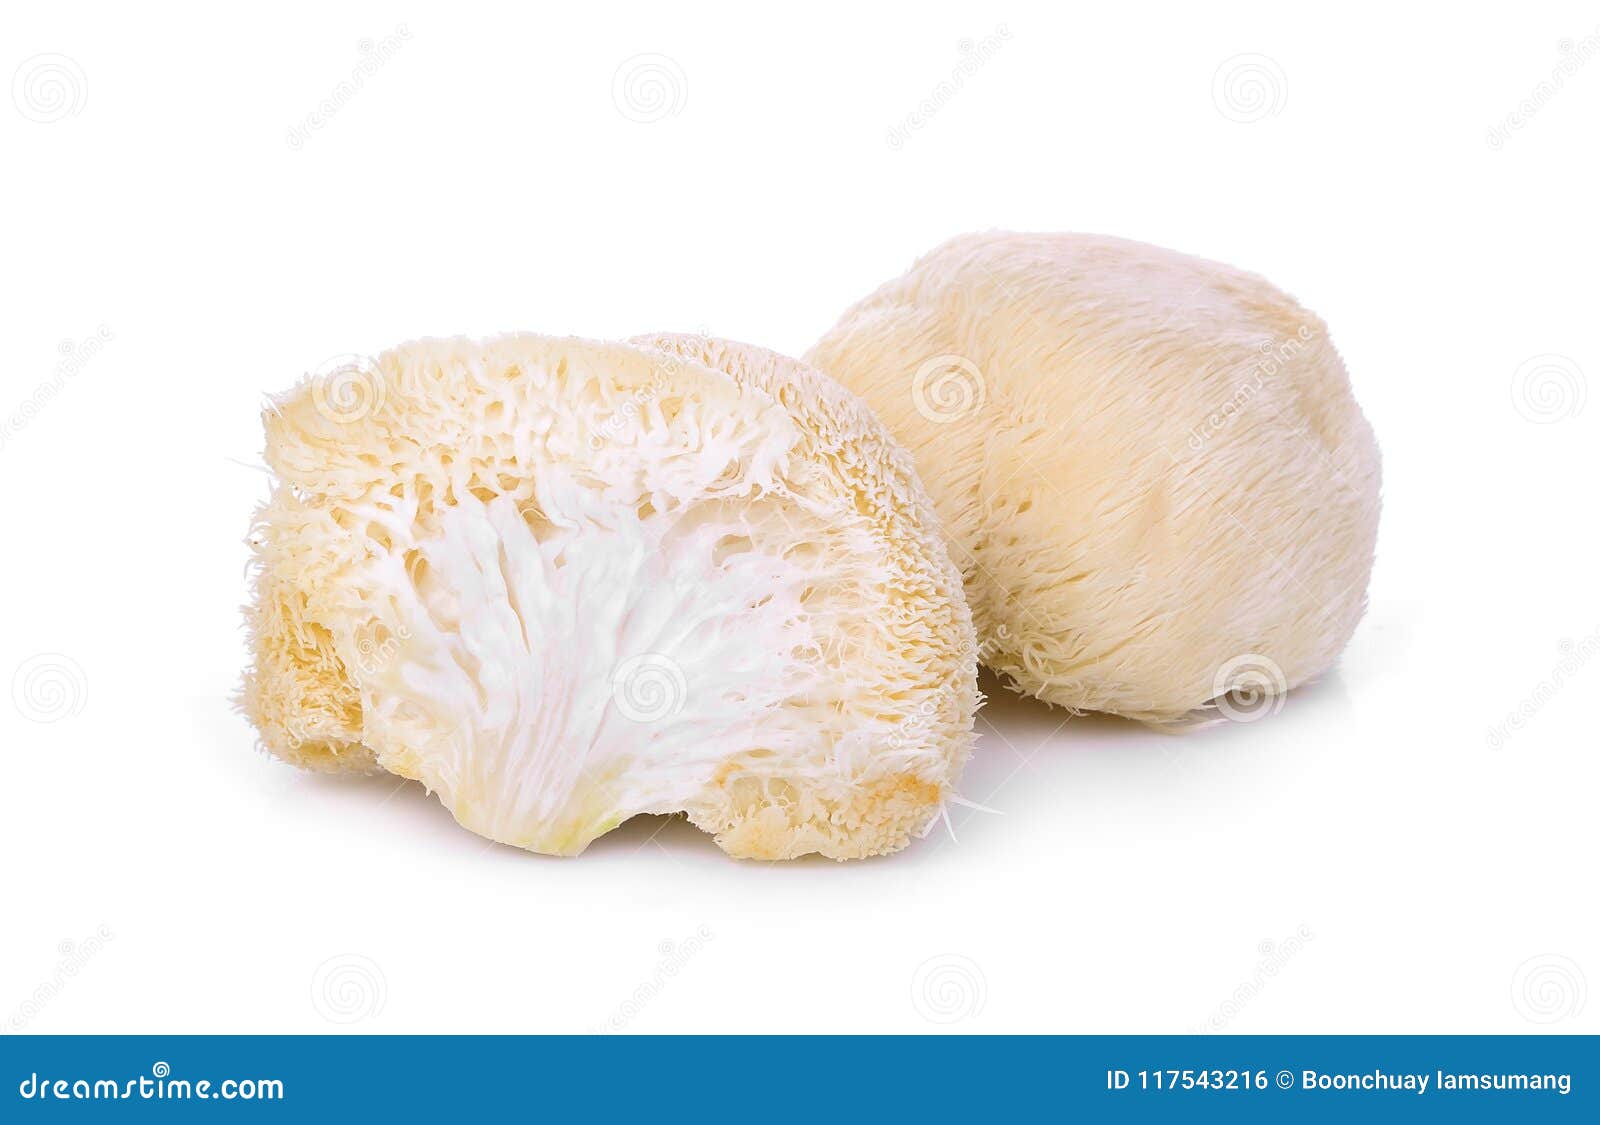 mushroom mokey head, lion mane or yamabushitake 